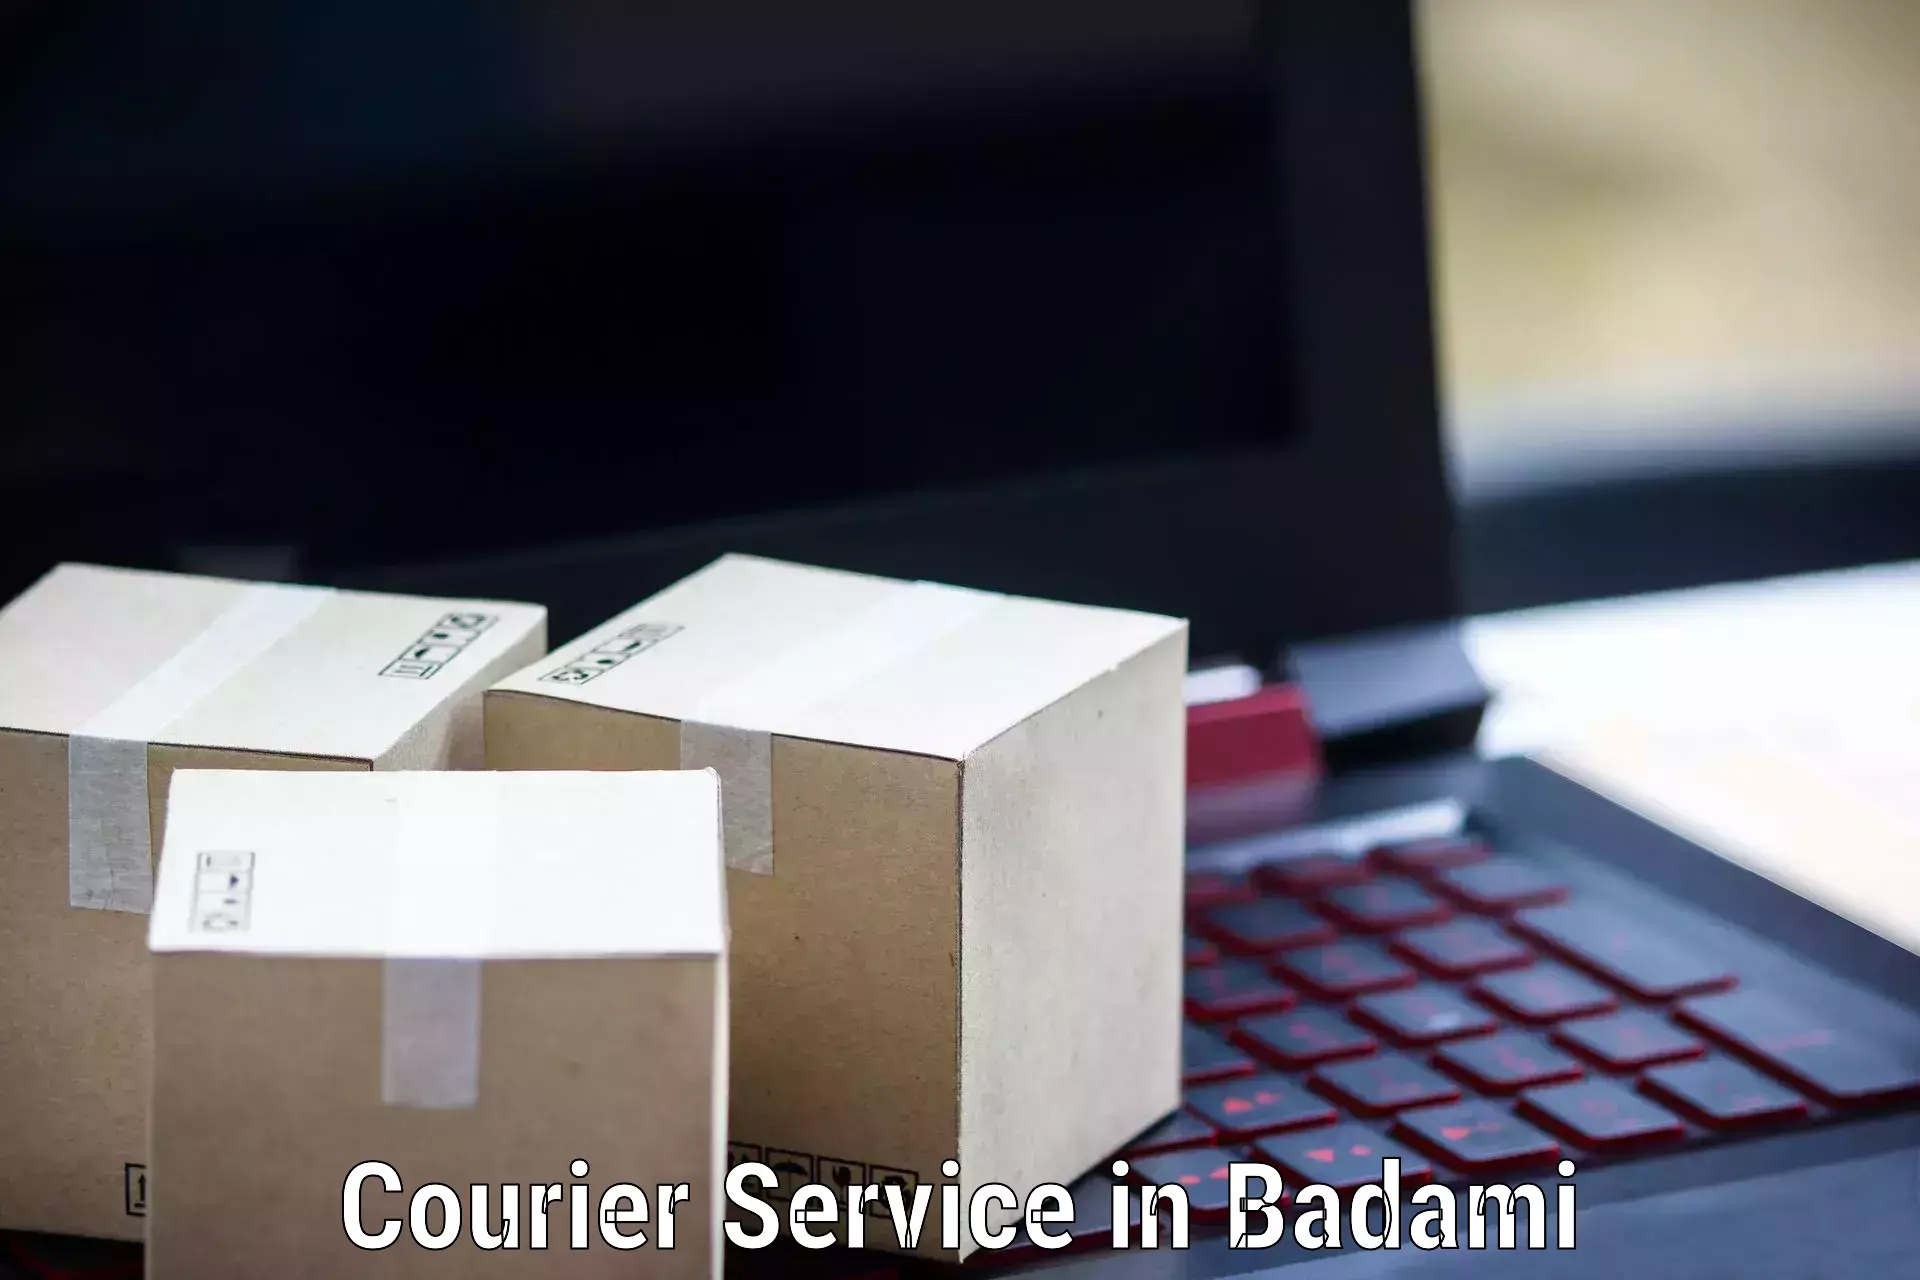 Bulk courier orders in Badami